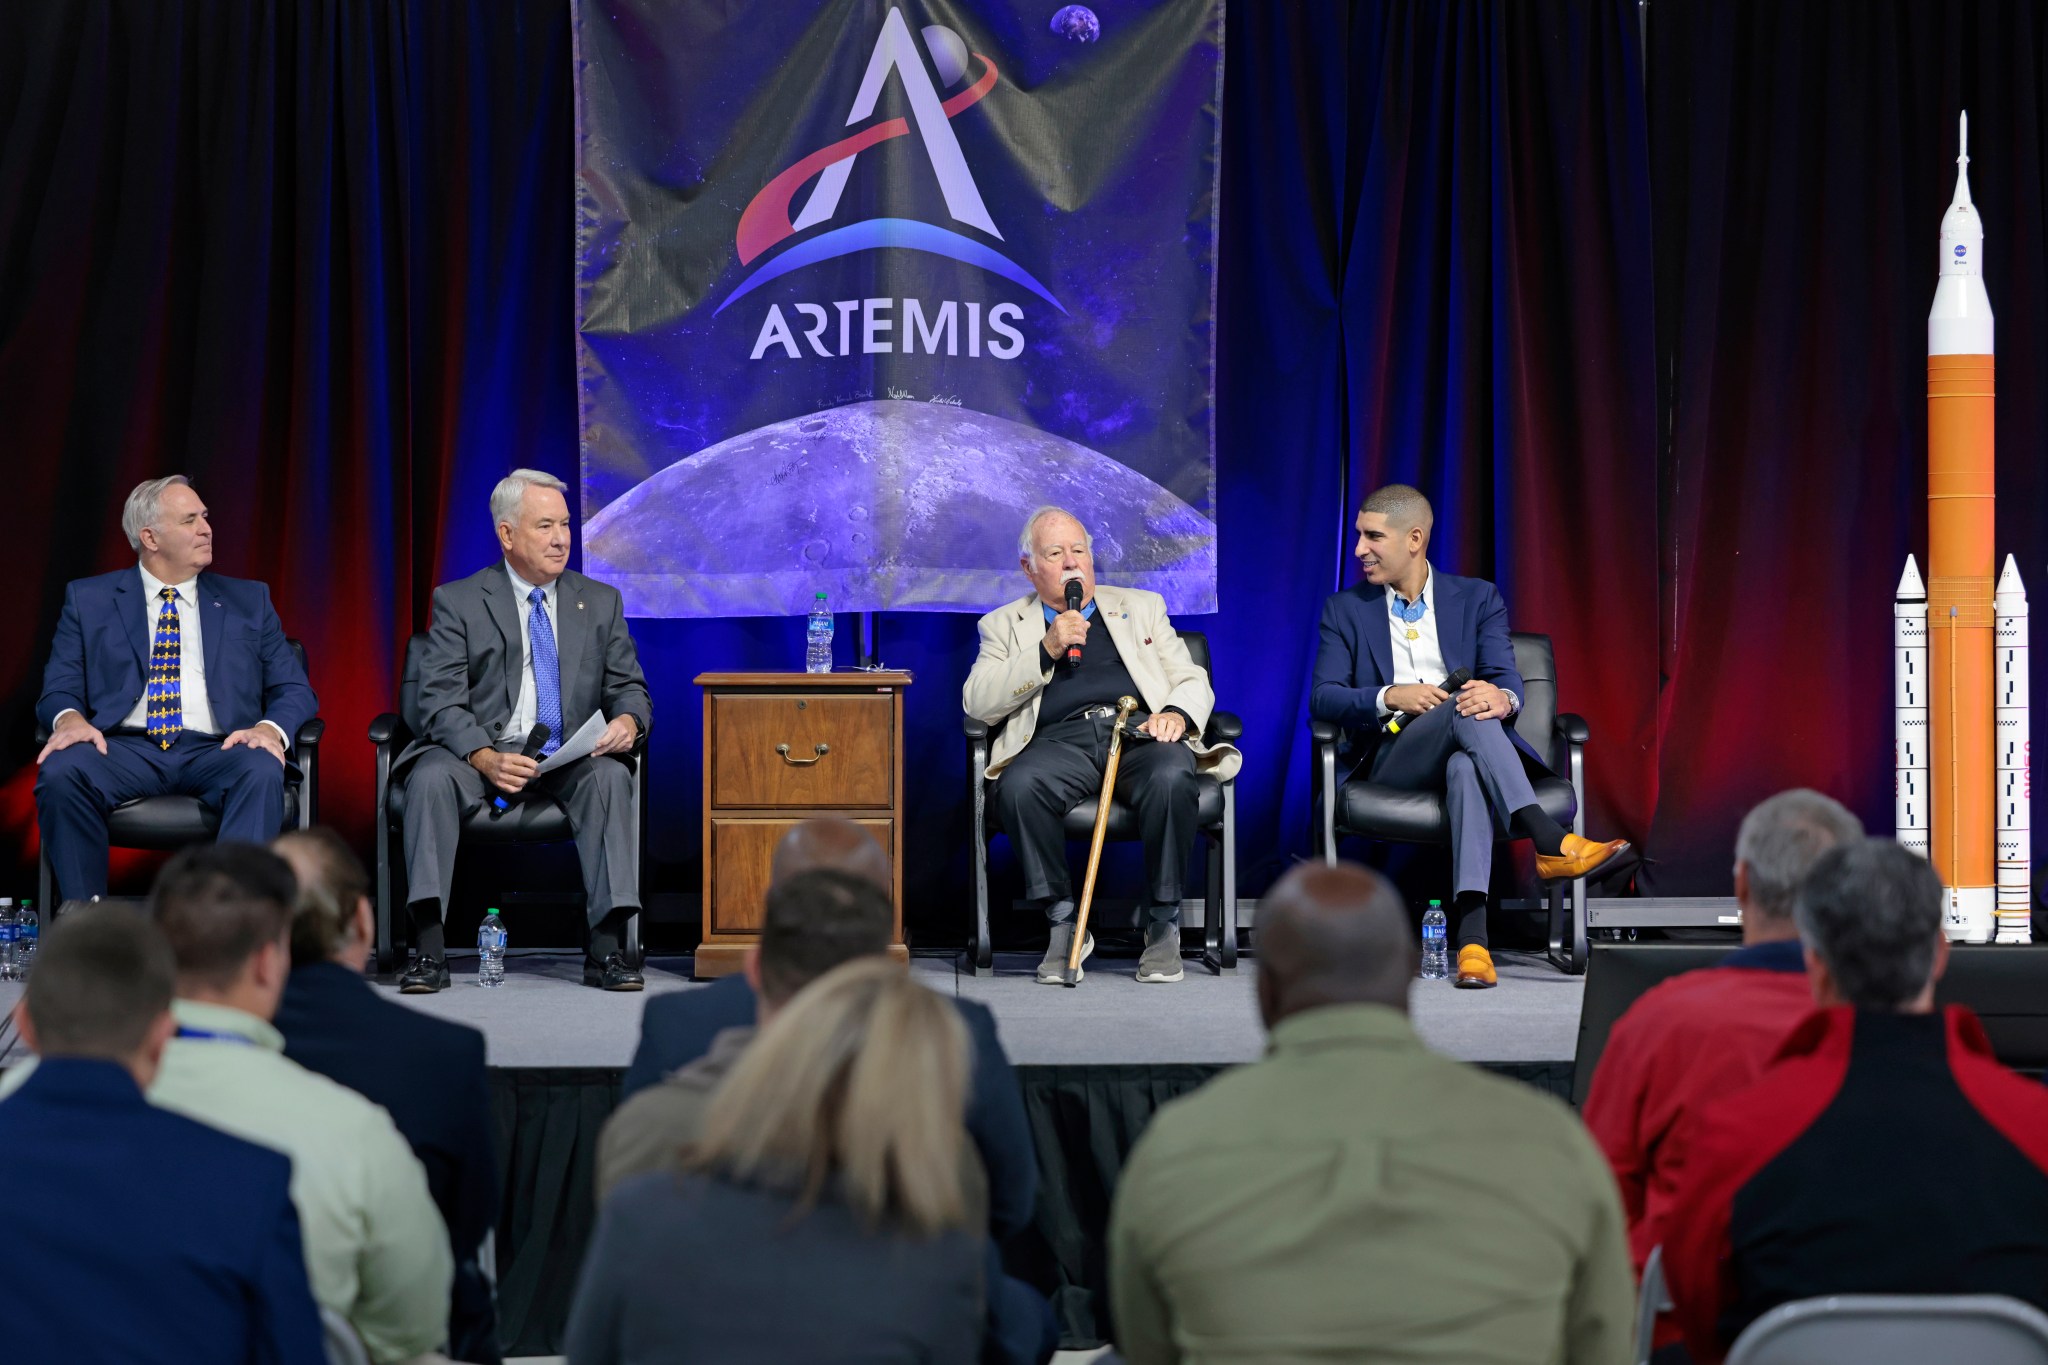 From left, NASA’s Michoud Assembly Facility Director Lonnie Dutreix, Maj. Gen. David Mize (Ret.), Col. Harvey C. “Barney” Barnum Jr. (Ret.), and Capt. Florent A. “Flo” Groberg (Ret.) participate in a panel discussion during a Valor Outreach event for veterans Nov. 1.